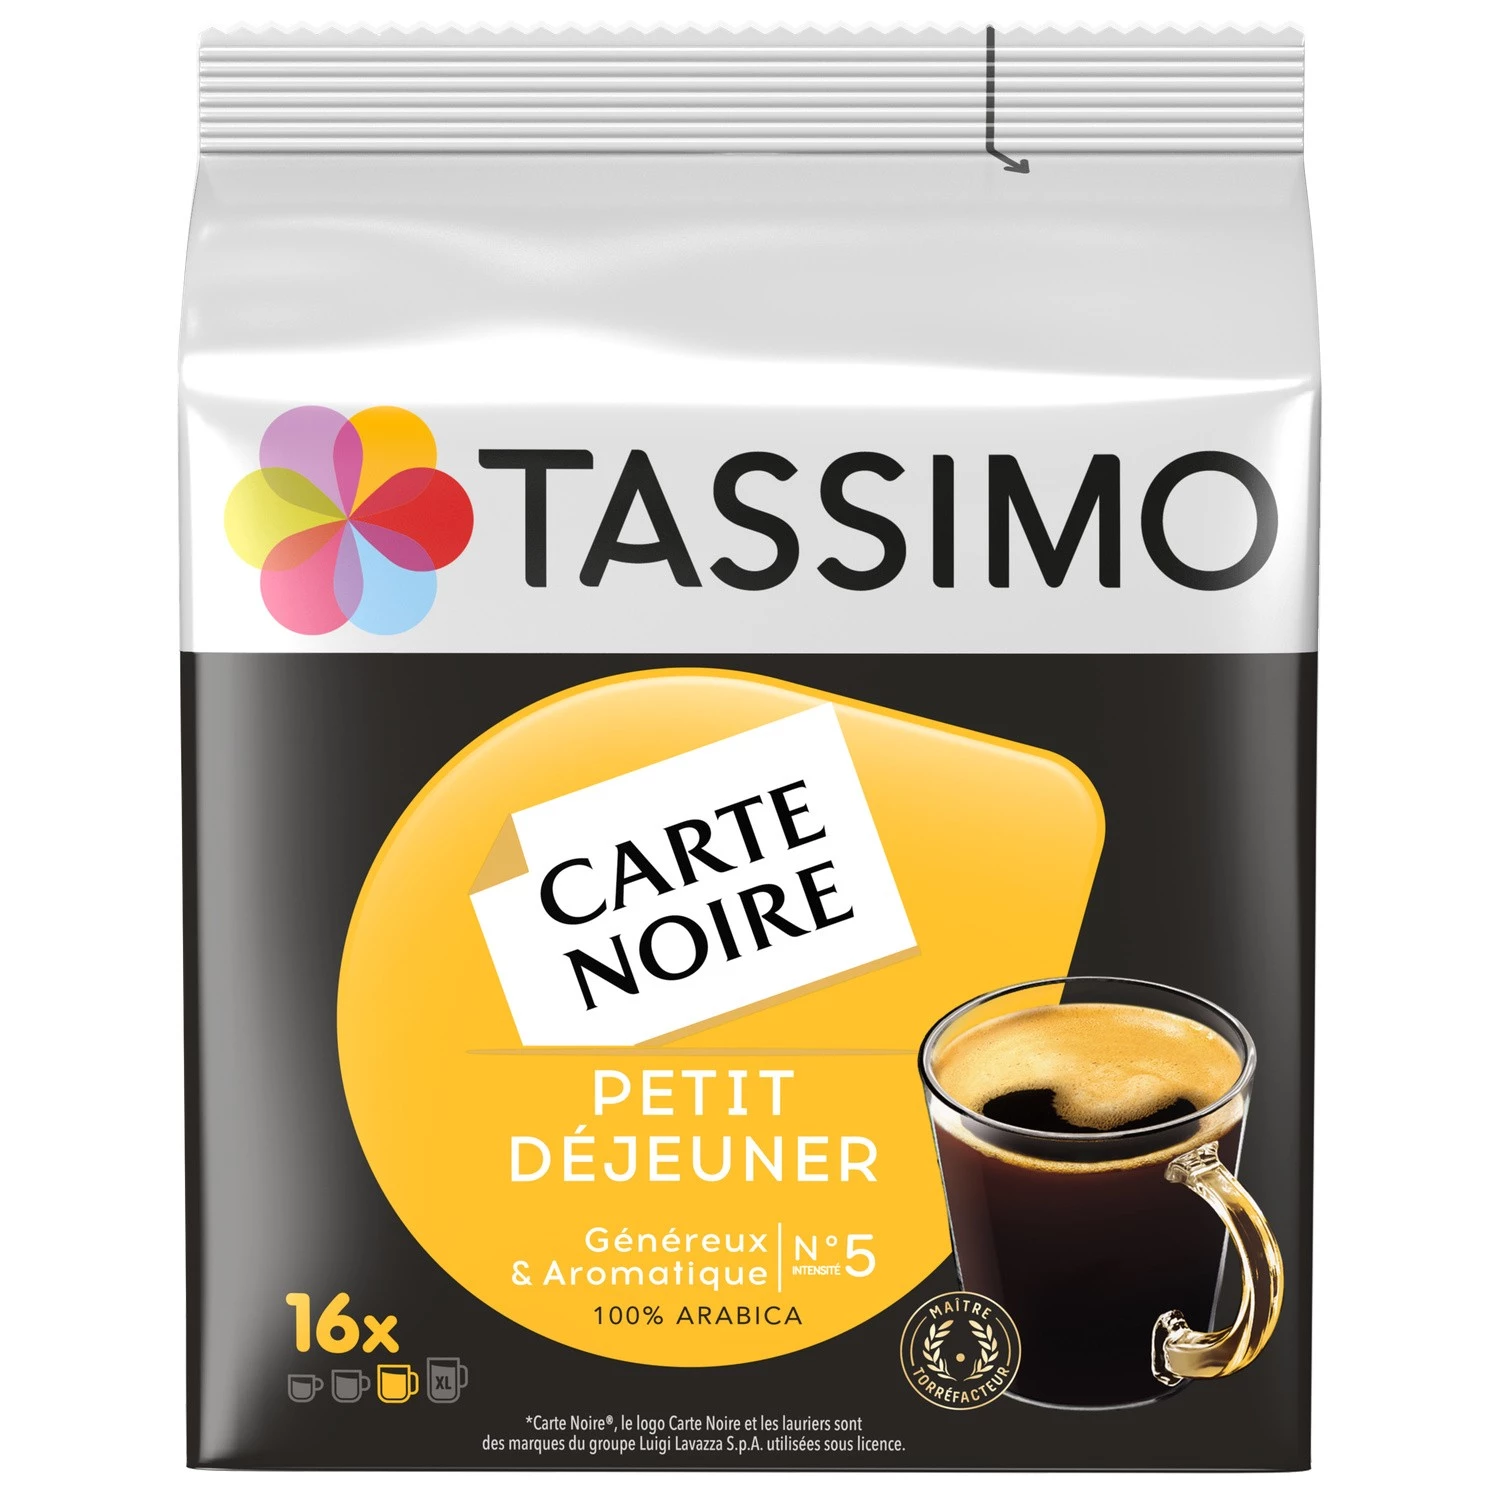 Frühstückskaffee aus schwarzer Karte, 16 Pads, 133 g - TASSIMO